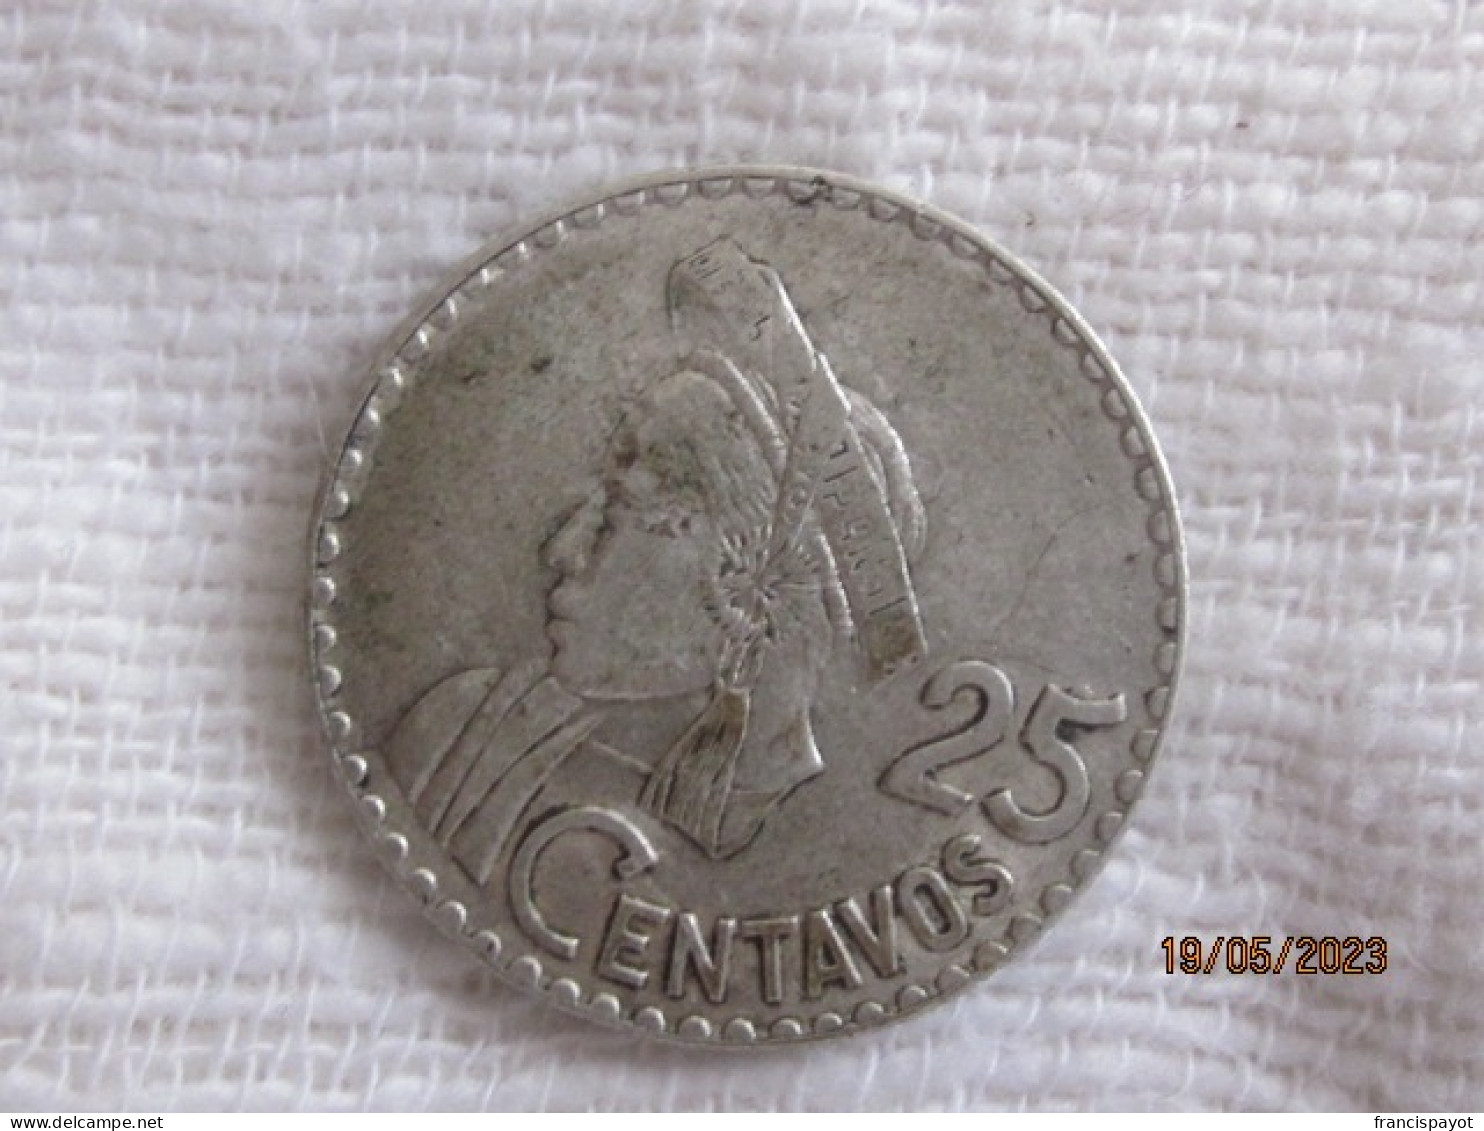 Guatemala: 25 Centavos 1963 - Guatemala